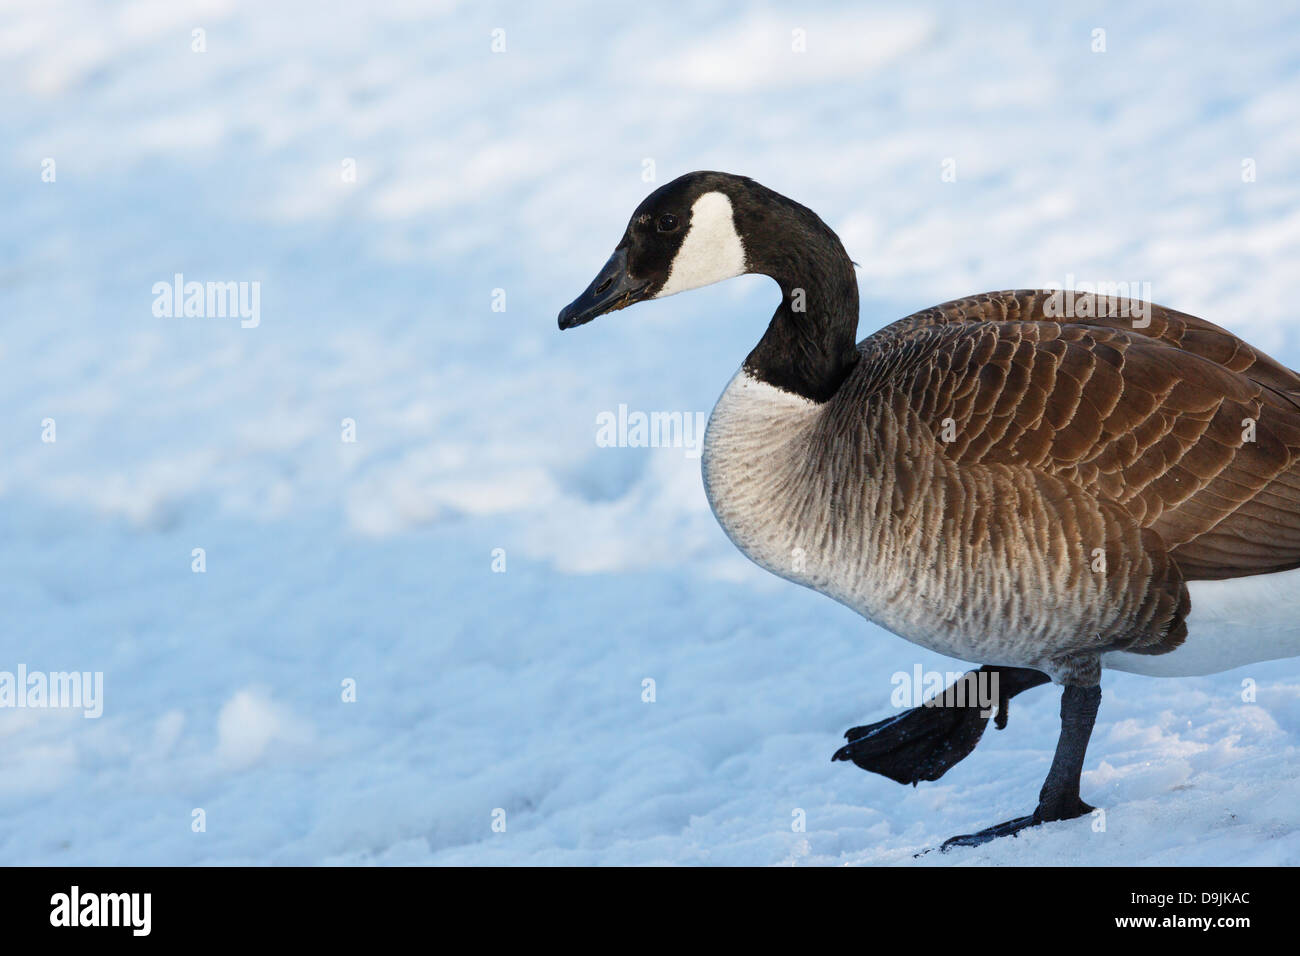 Canada Goose passeggiate sulla neve invernale - Minnesota, Stati Uniti d'America. Foto Stock